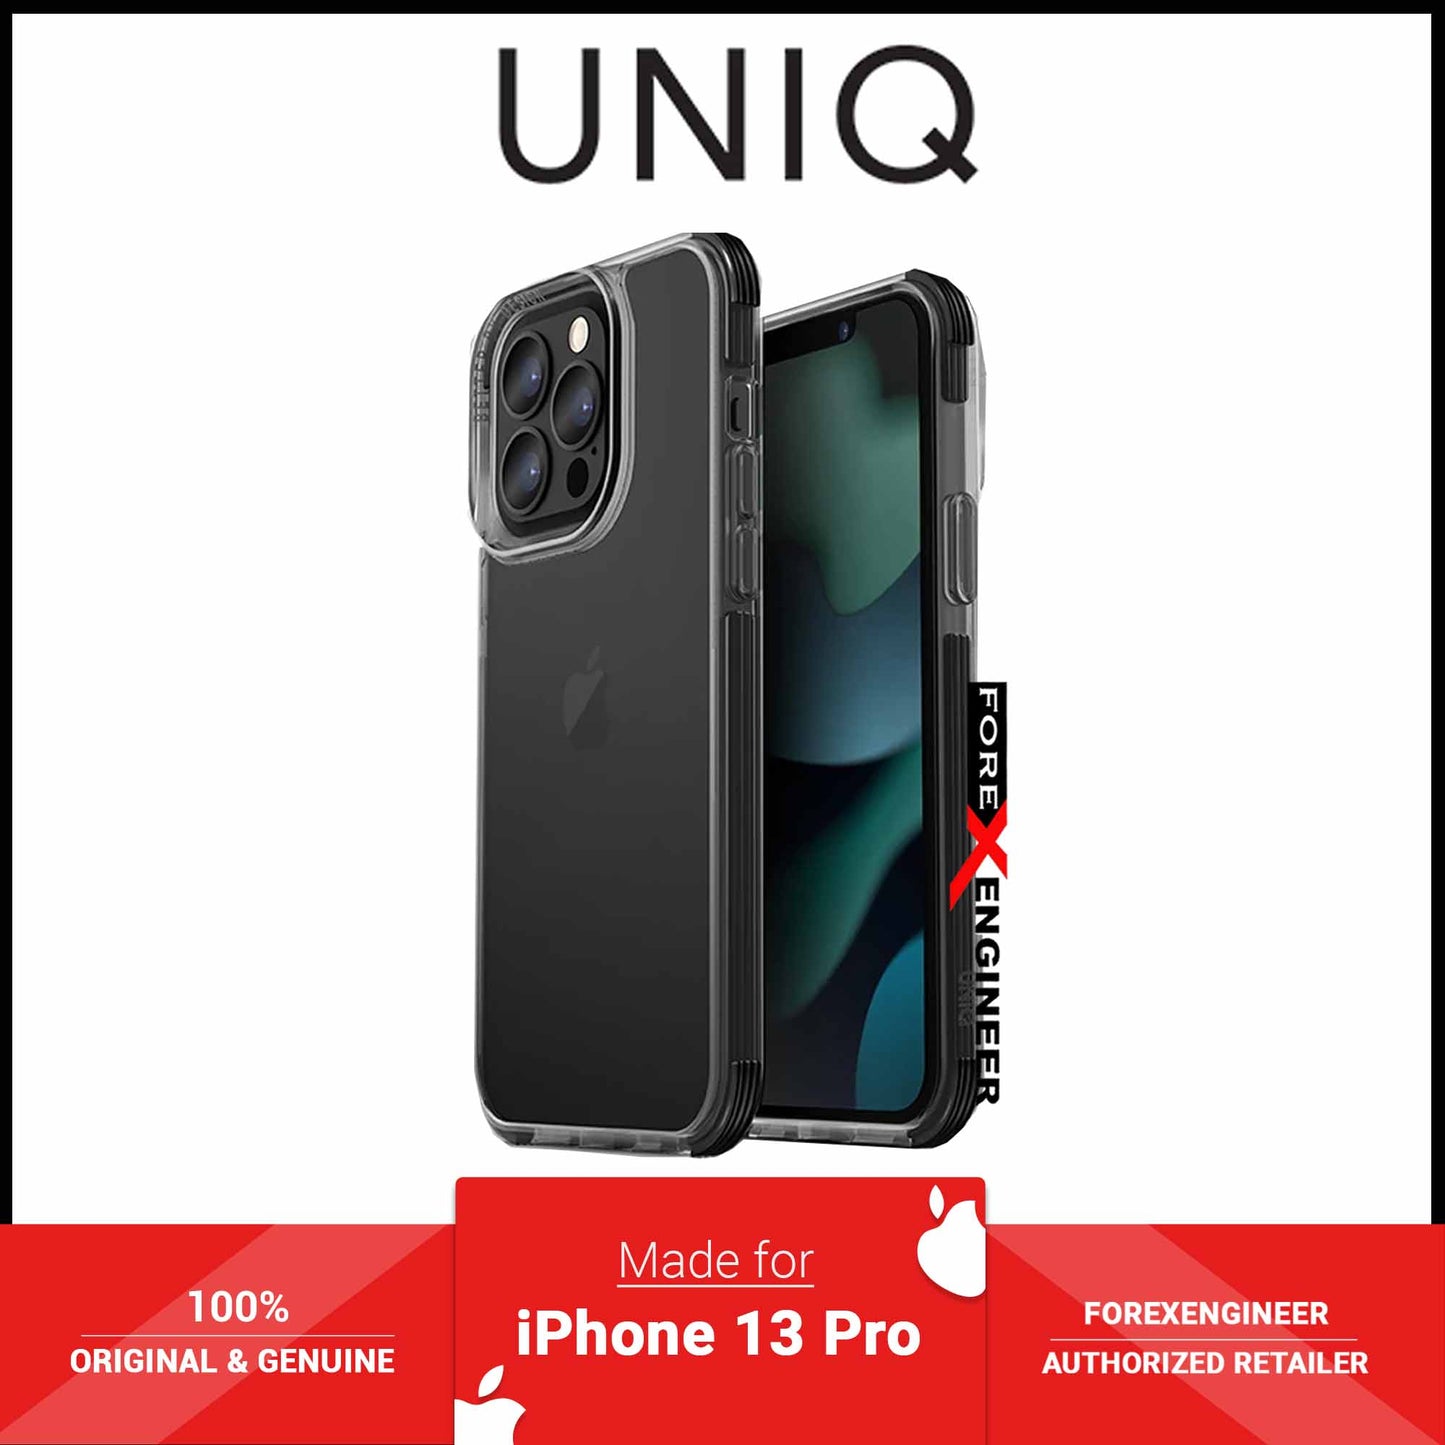 UNIQ Combat Case for iPhone 13 Pro 6.1" 5G - Black (Barcode: 8886463677971 )